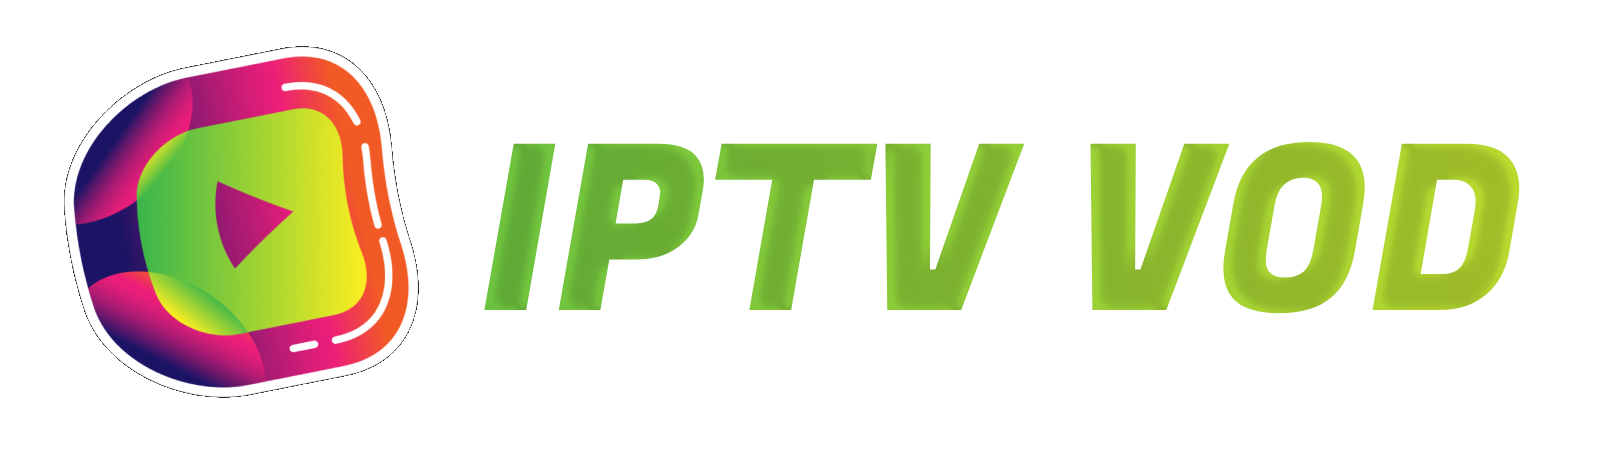 IPTV VOD